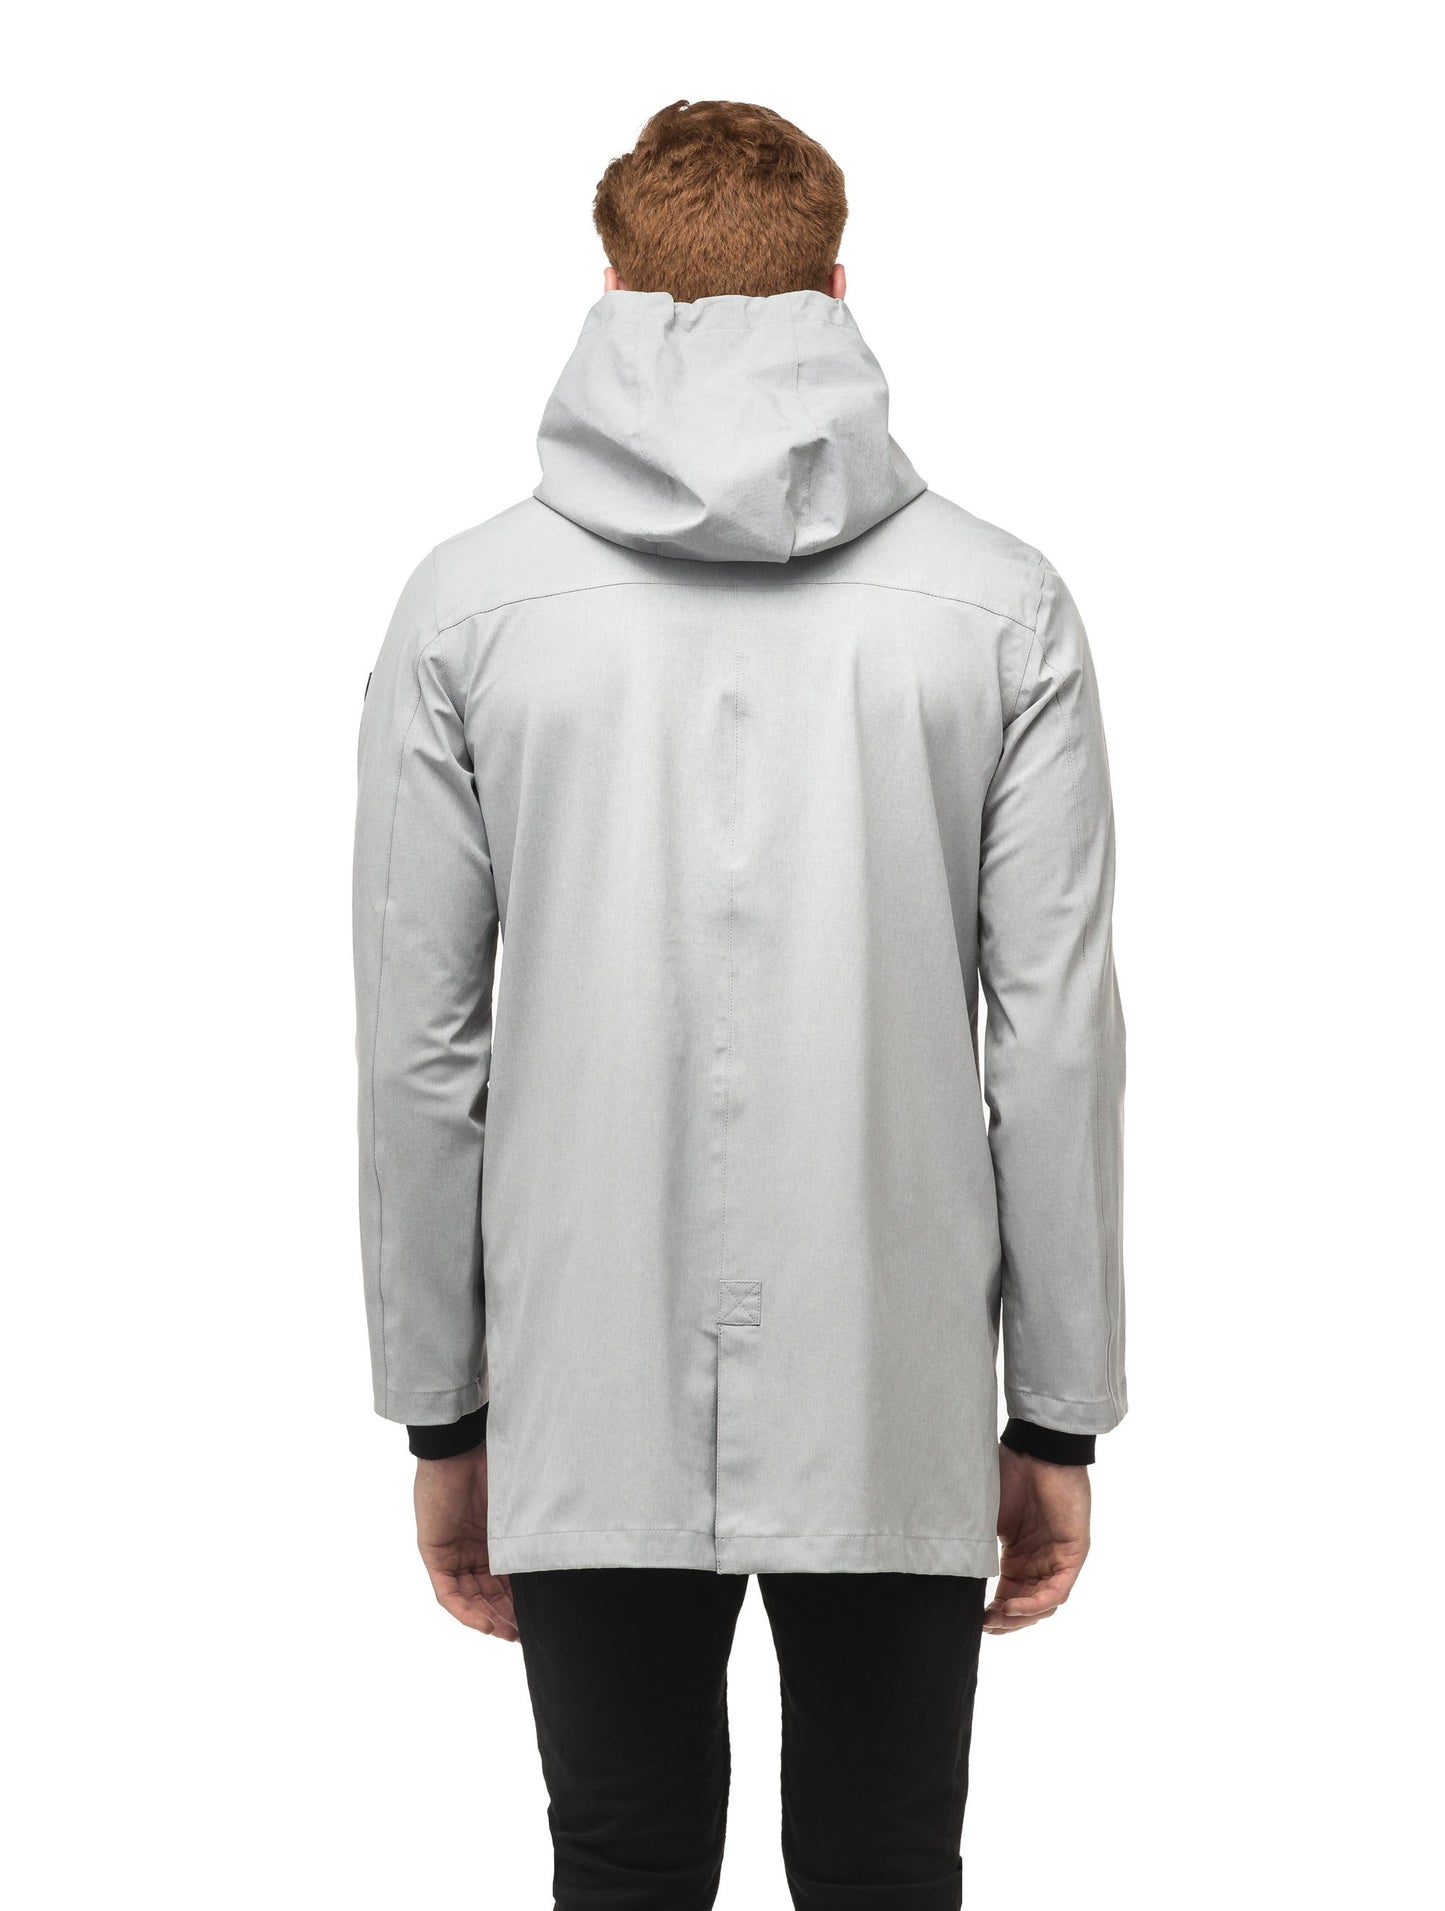 Men's thigh length rain coat with hood in Light Grey